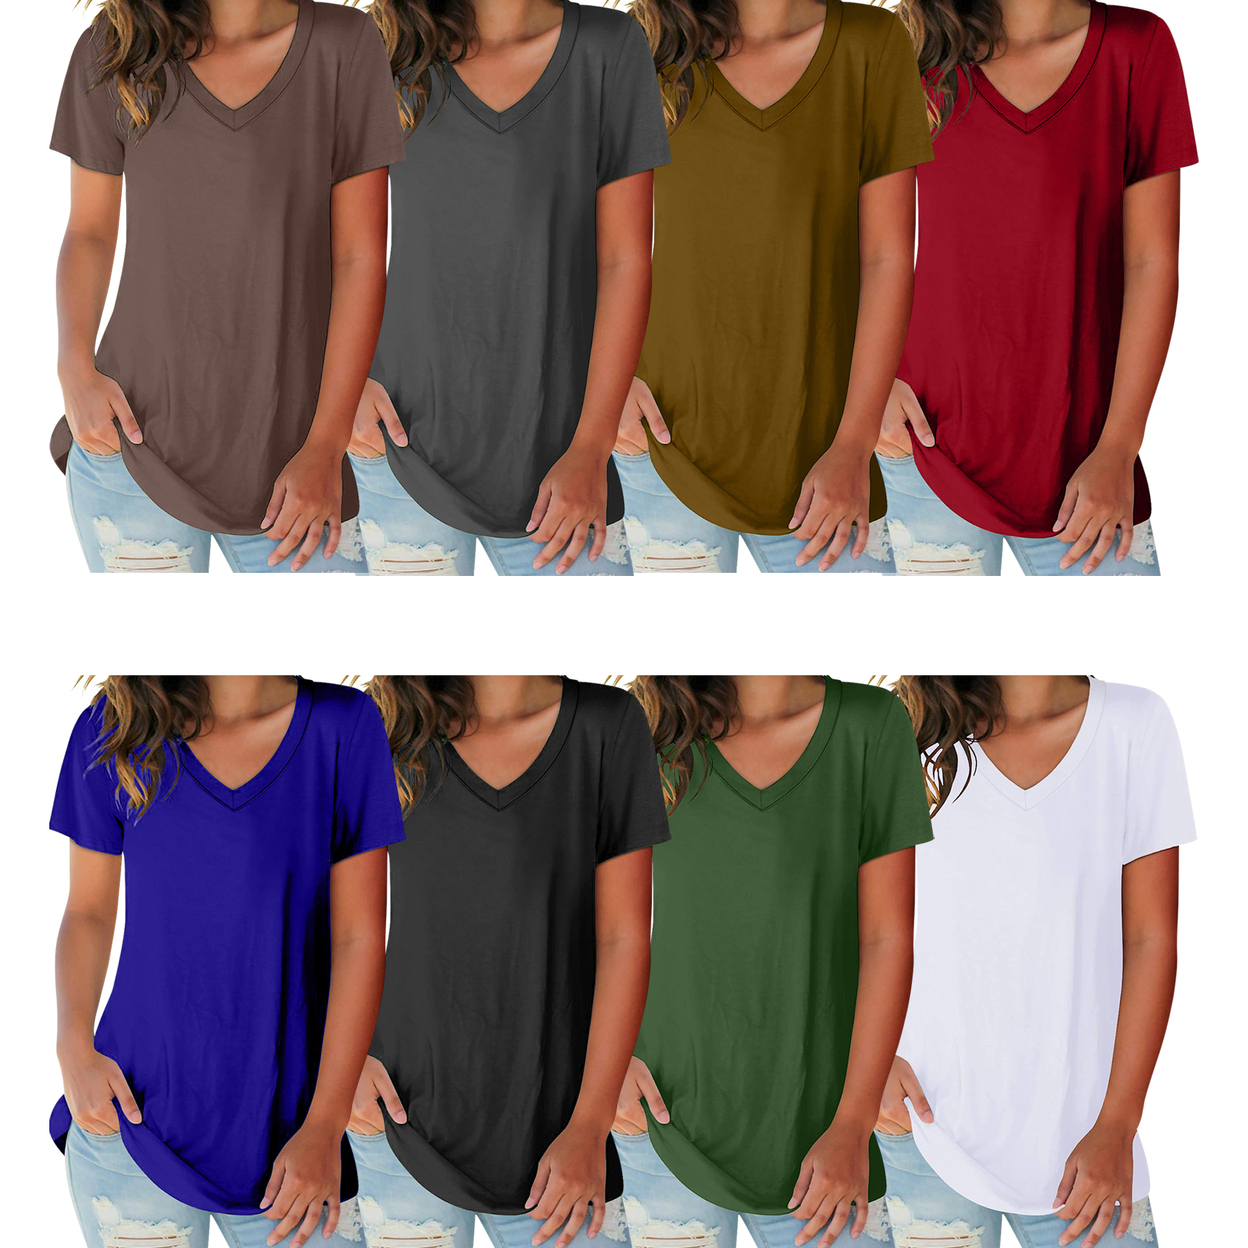 2-Pack: Women's Ultra Soft Smooth Cotton Blend Basic V-Neck Short Sleeve Shirts - Grey & Green, Small